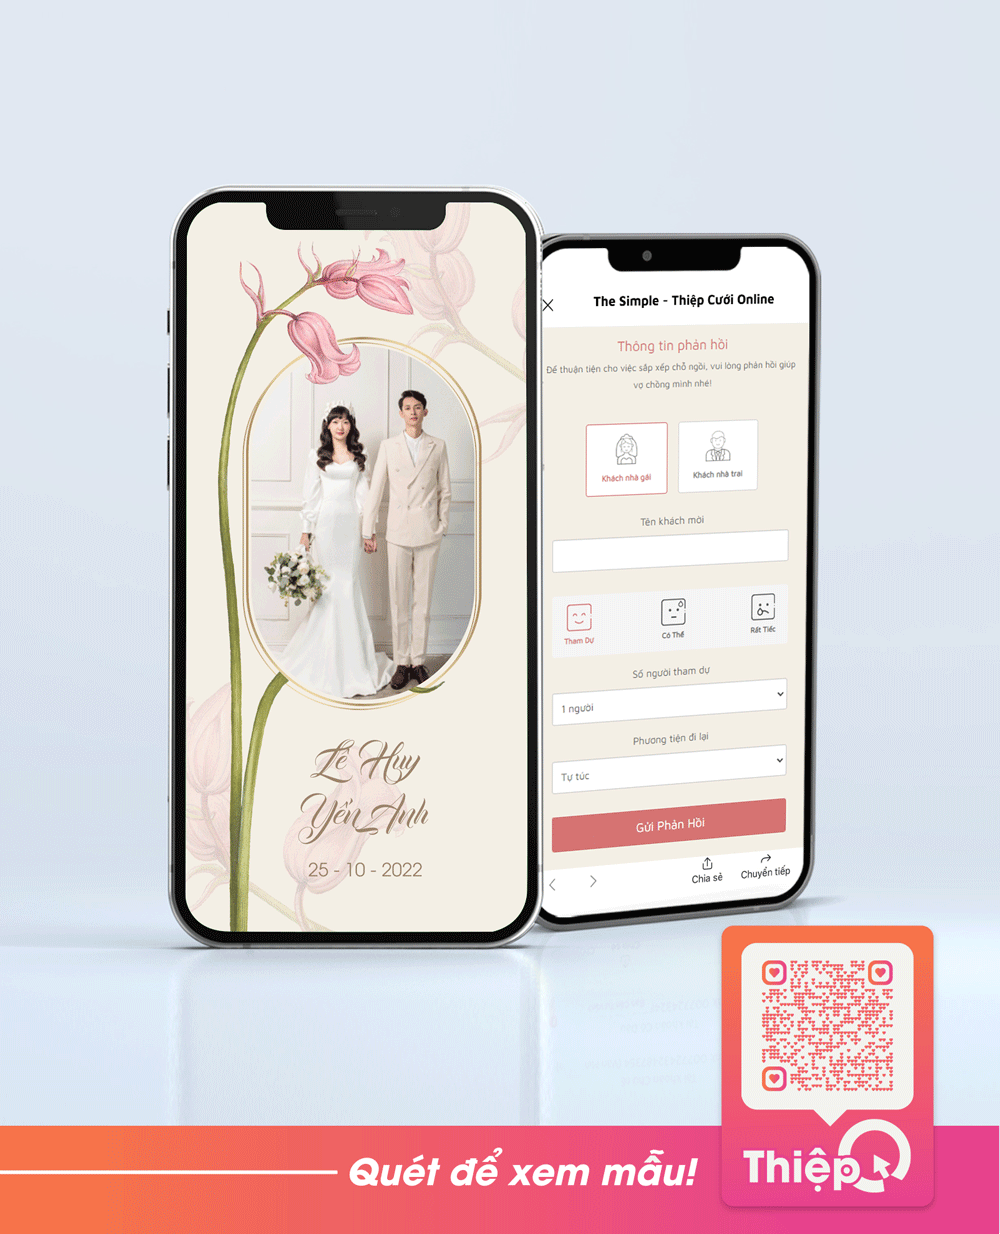 Thiệp cưới Online - Hoa Và Em 06 - Mini Wedding Website with RSVP, Digital Wedding Invitation